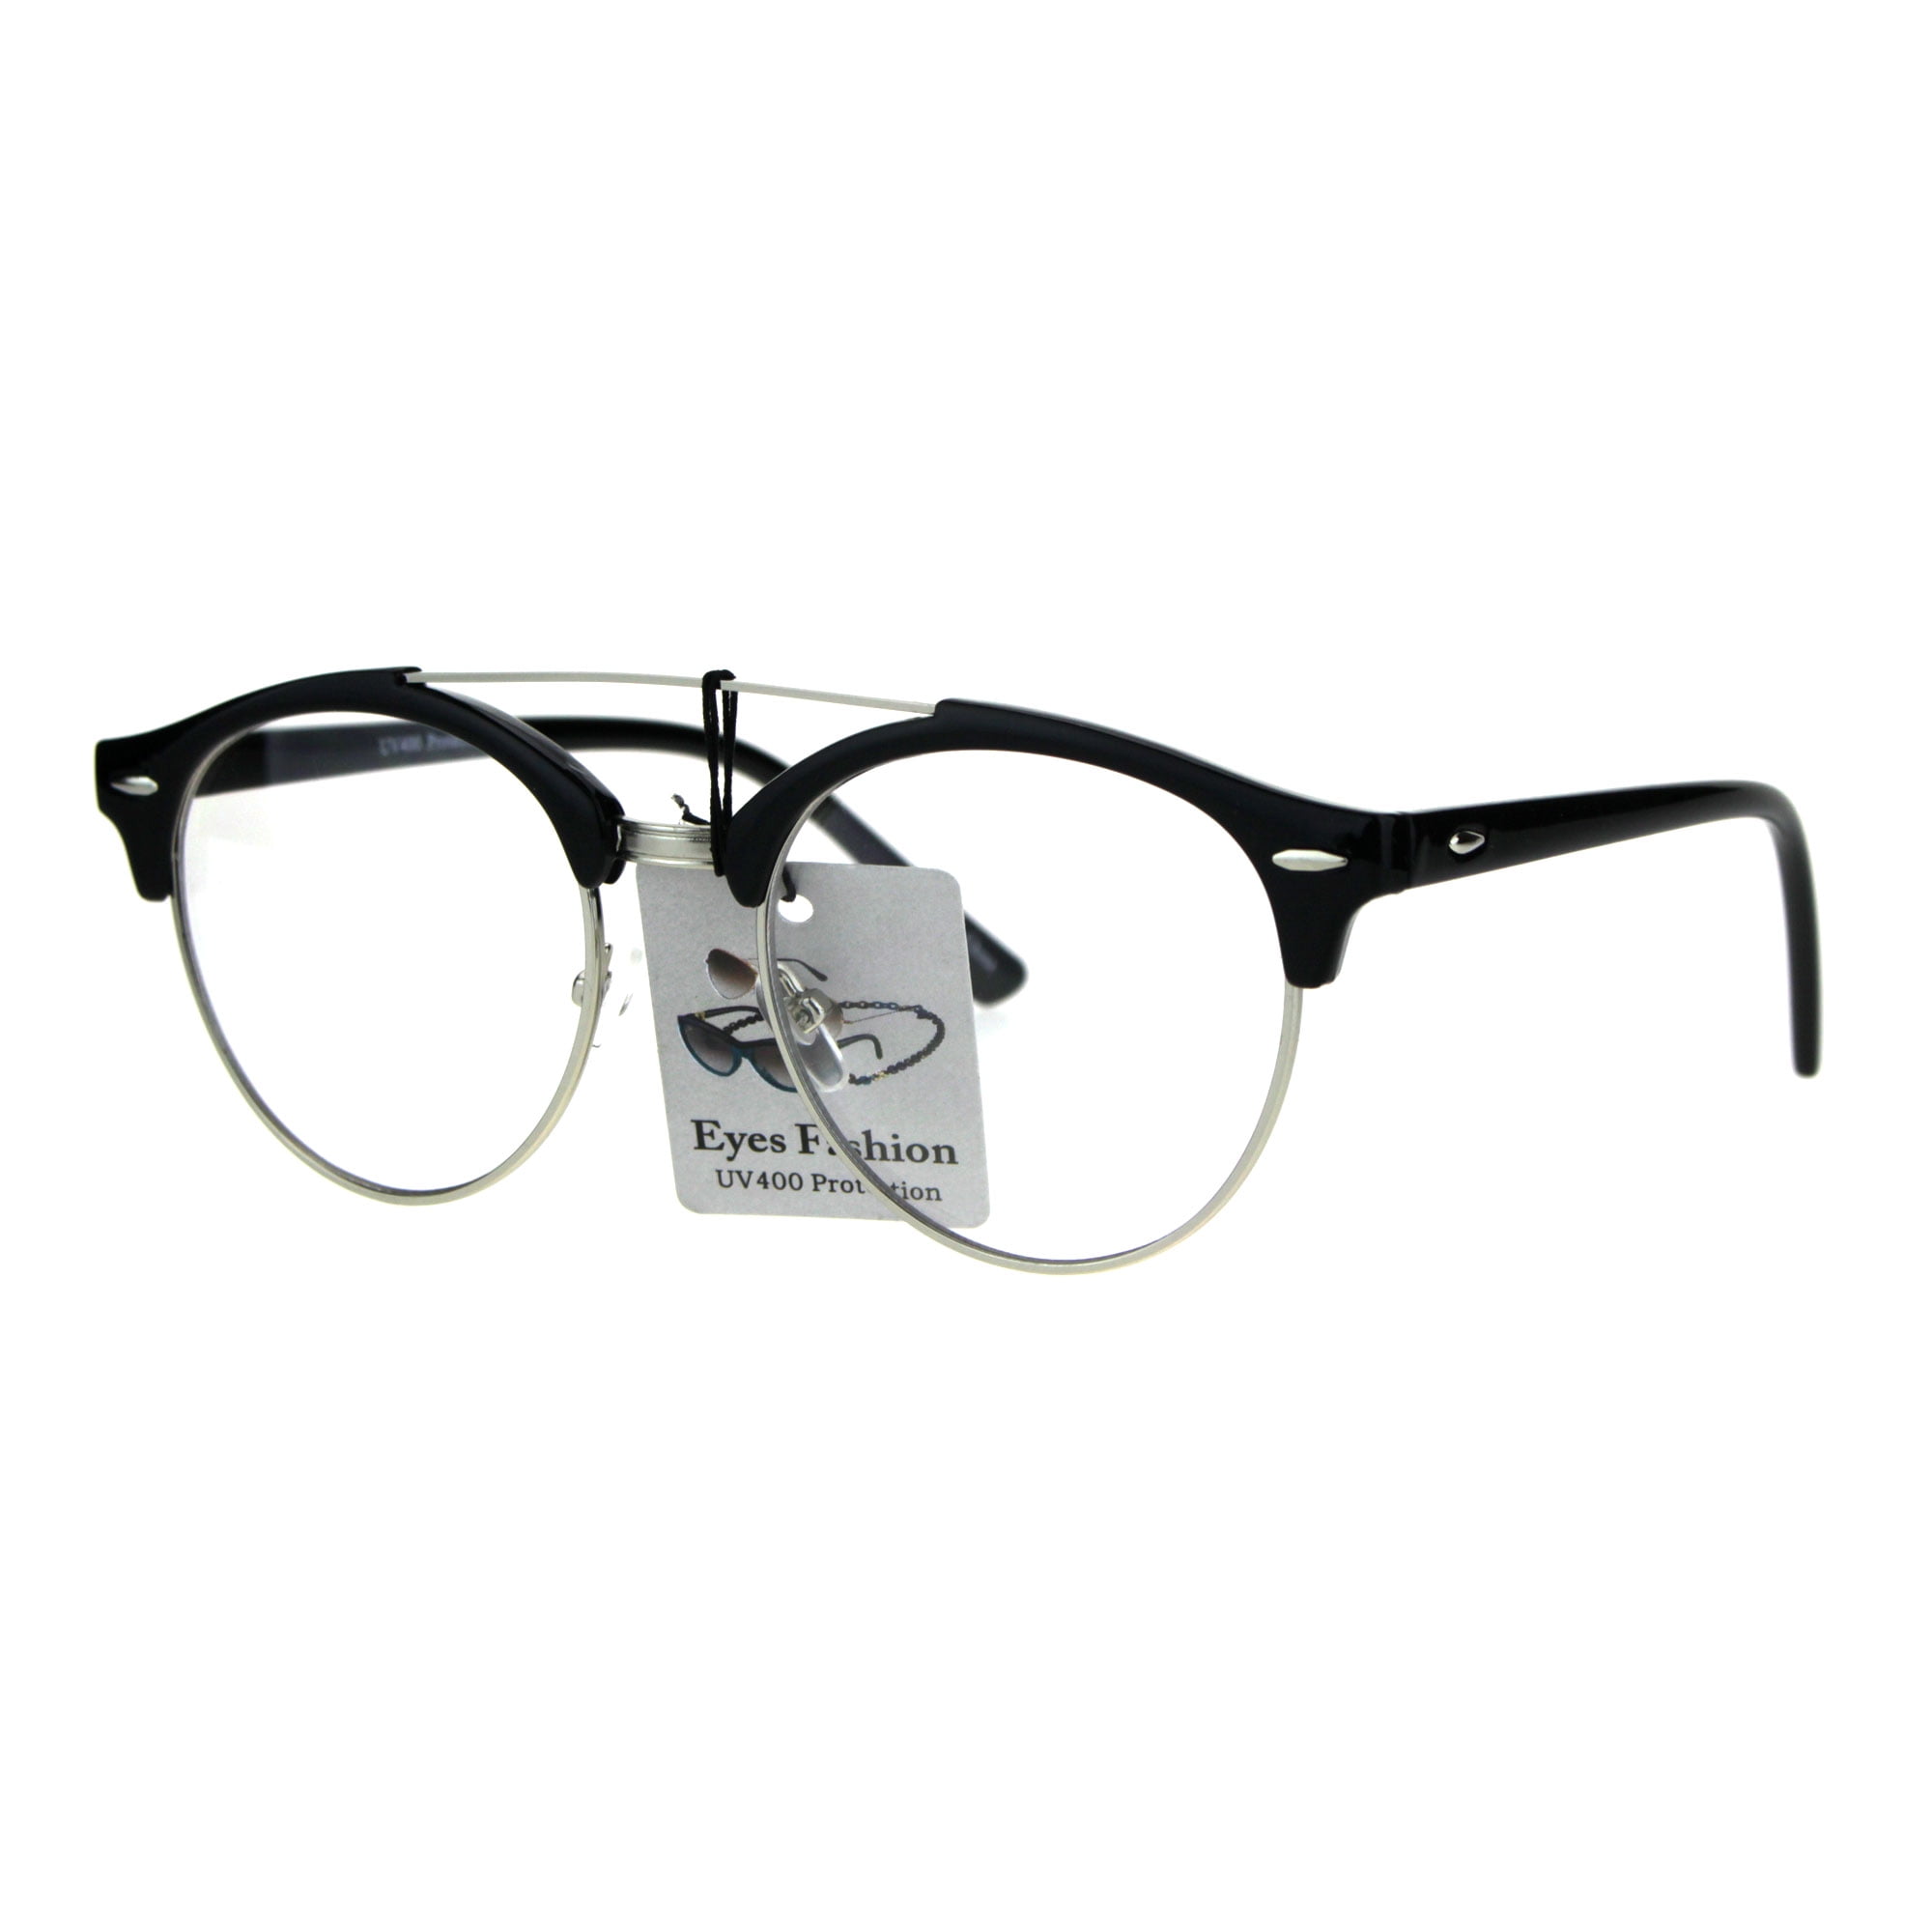 CLASSIC VINTAGE RETRO Style Clear Lens EYE GLASSES Black & Silver Fashion Frame 